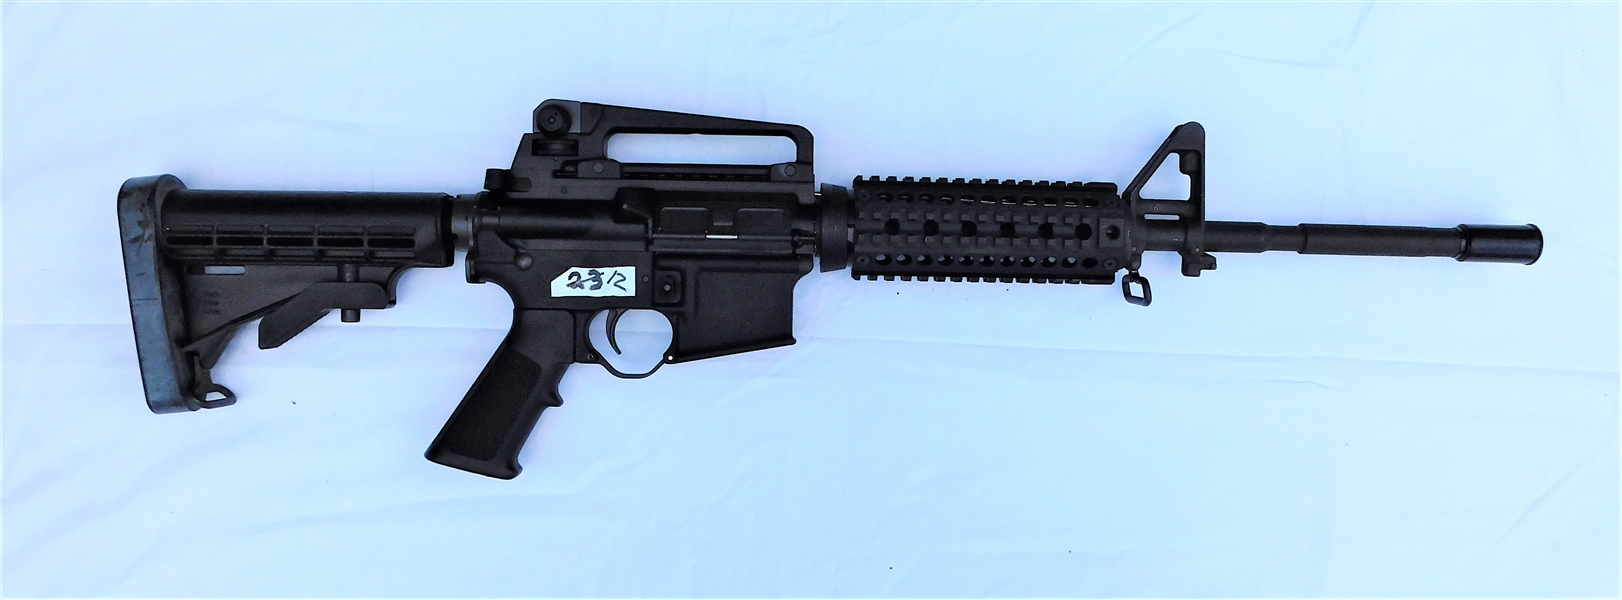 Rock River Arms LAR-15 5.56mm/223 Caliber Semi-Automatic Rifle 